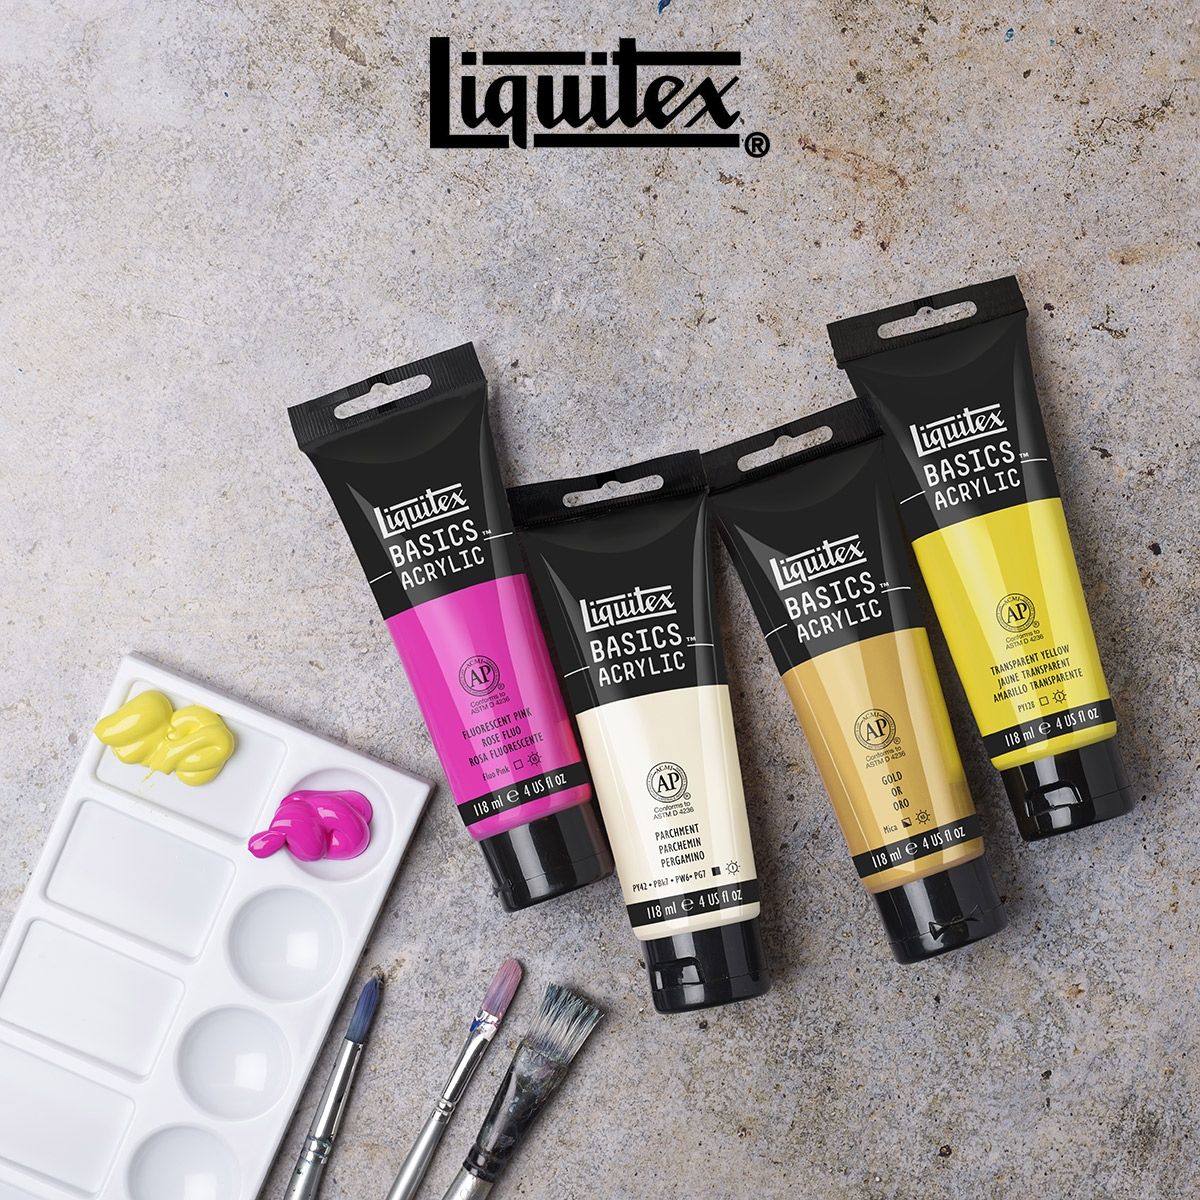 Liquitex Basics Acrylics